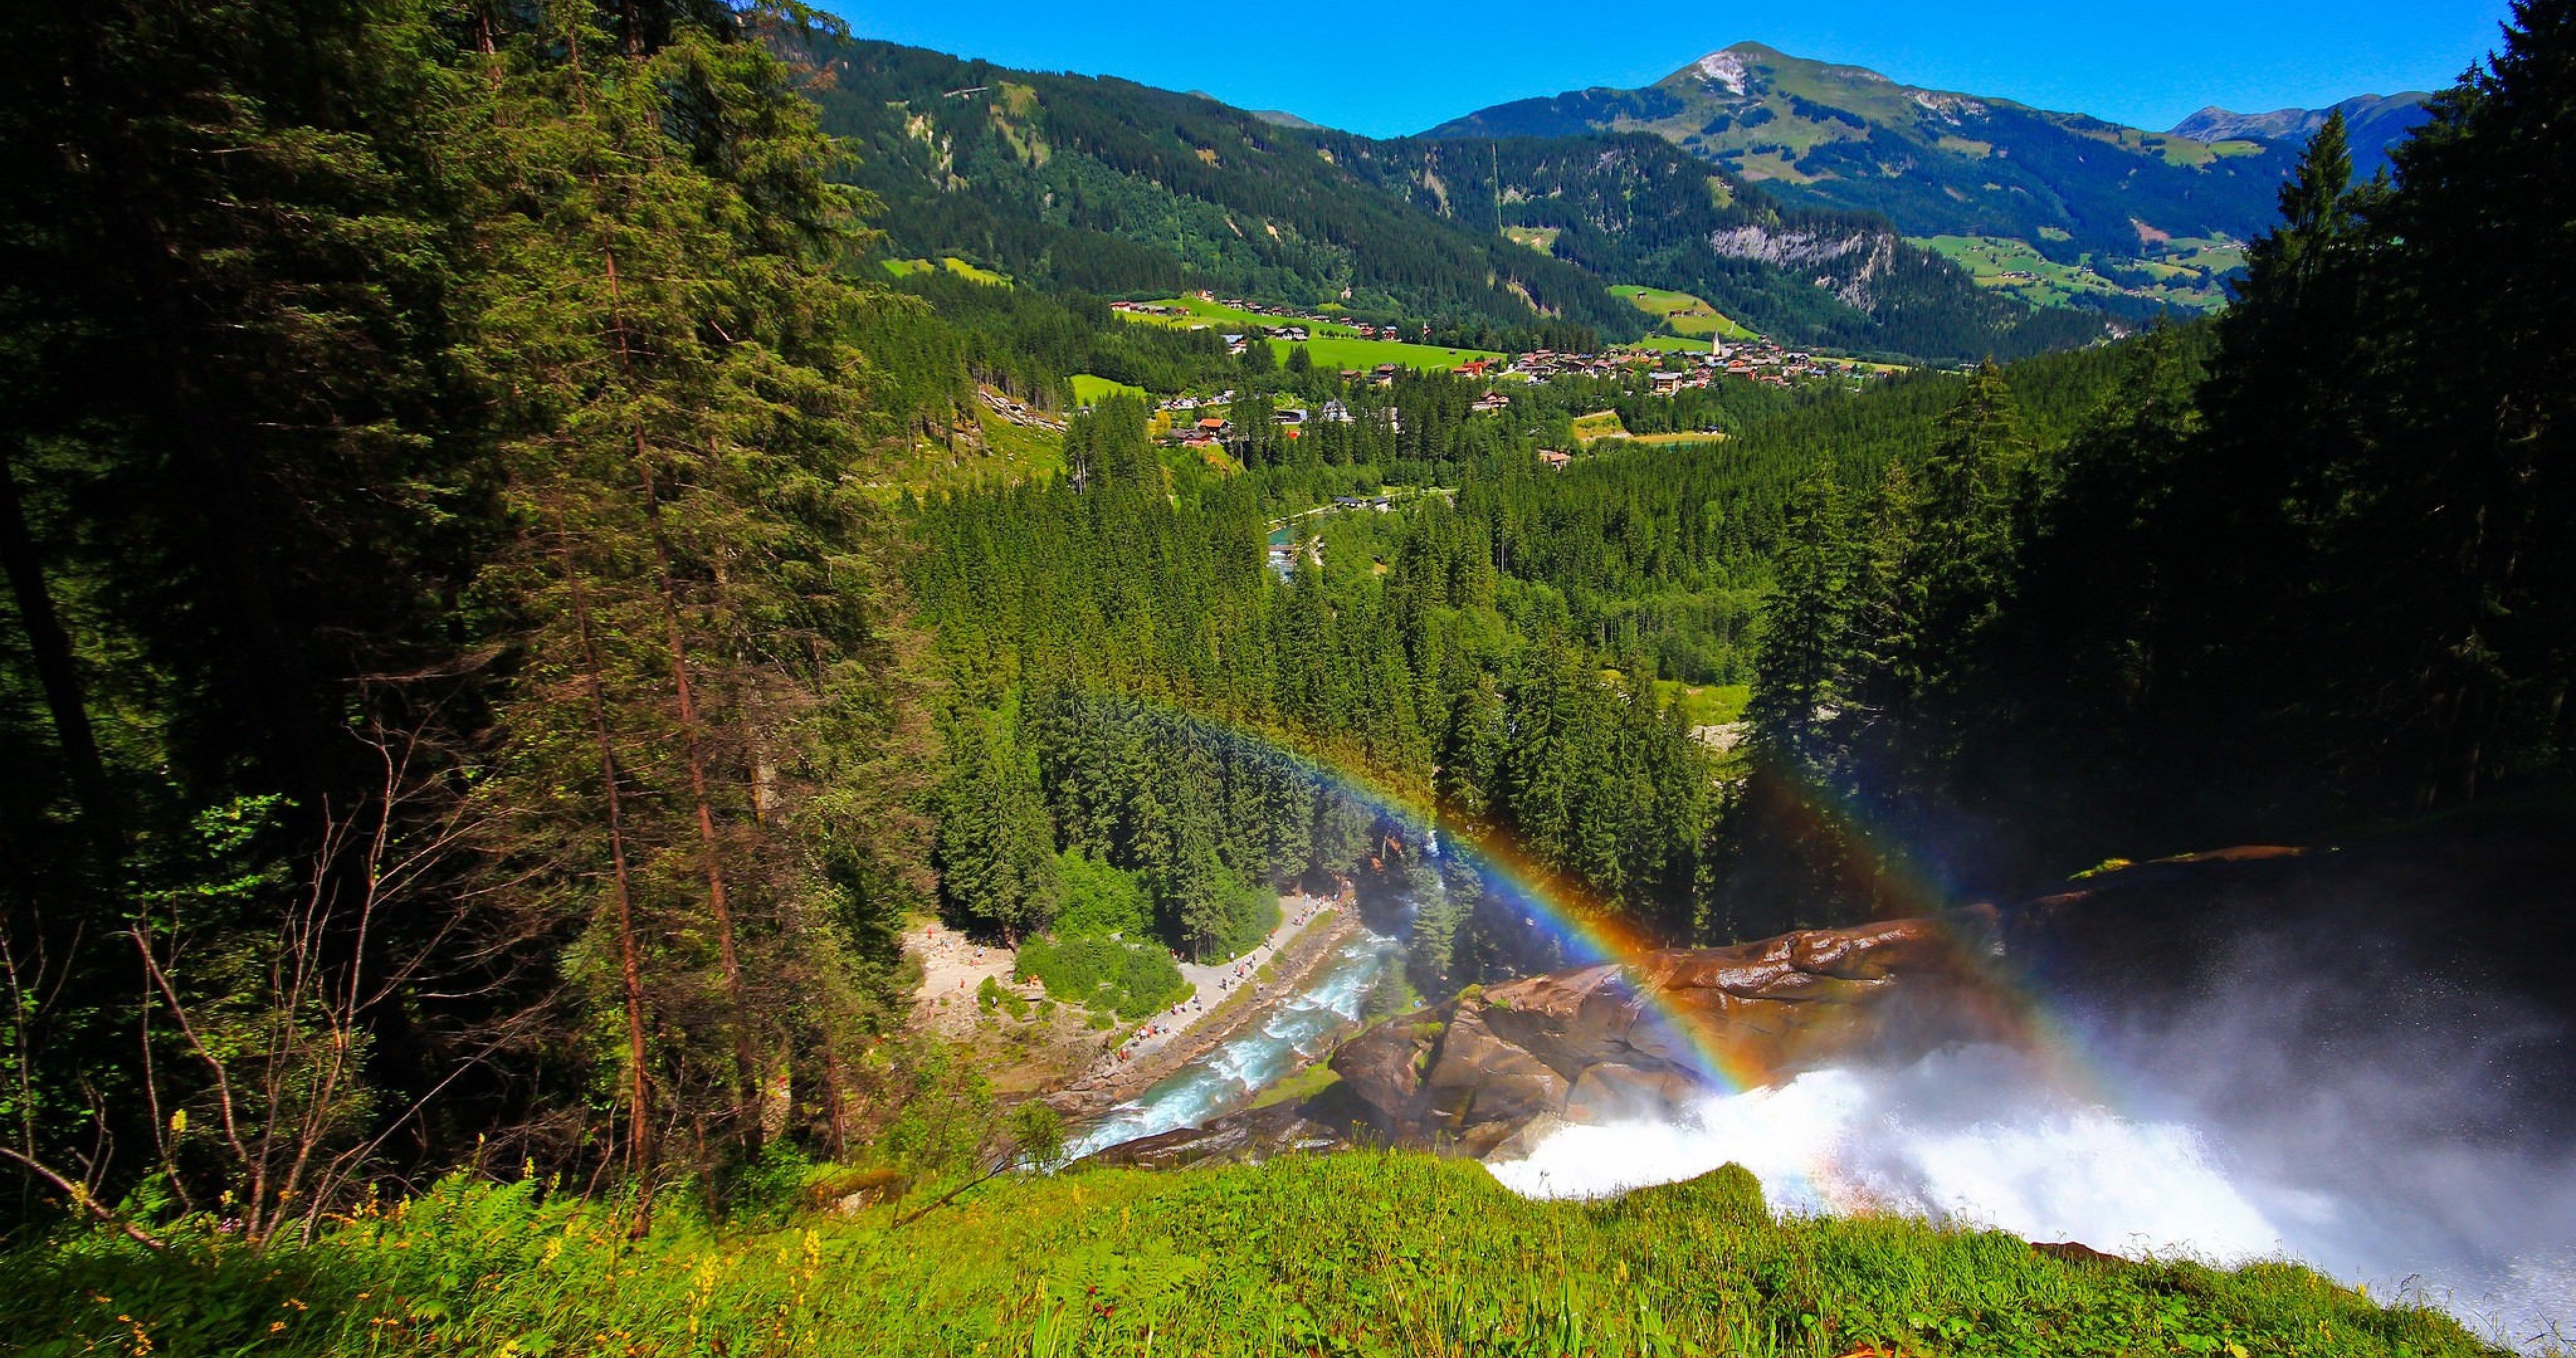 krimml waterfalls austria 4k ultra HD wallpaper. Waterfall, Rainbow mountain, Valley village